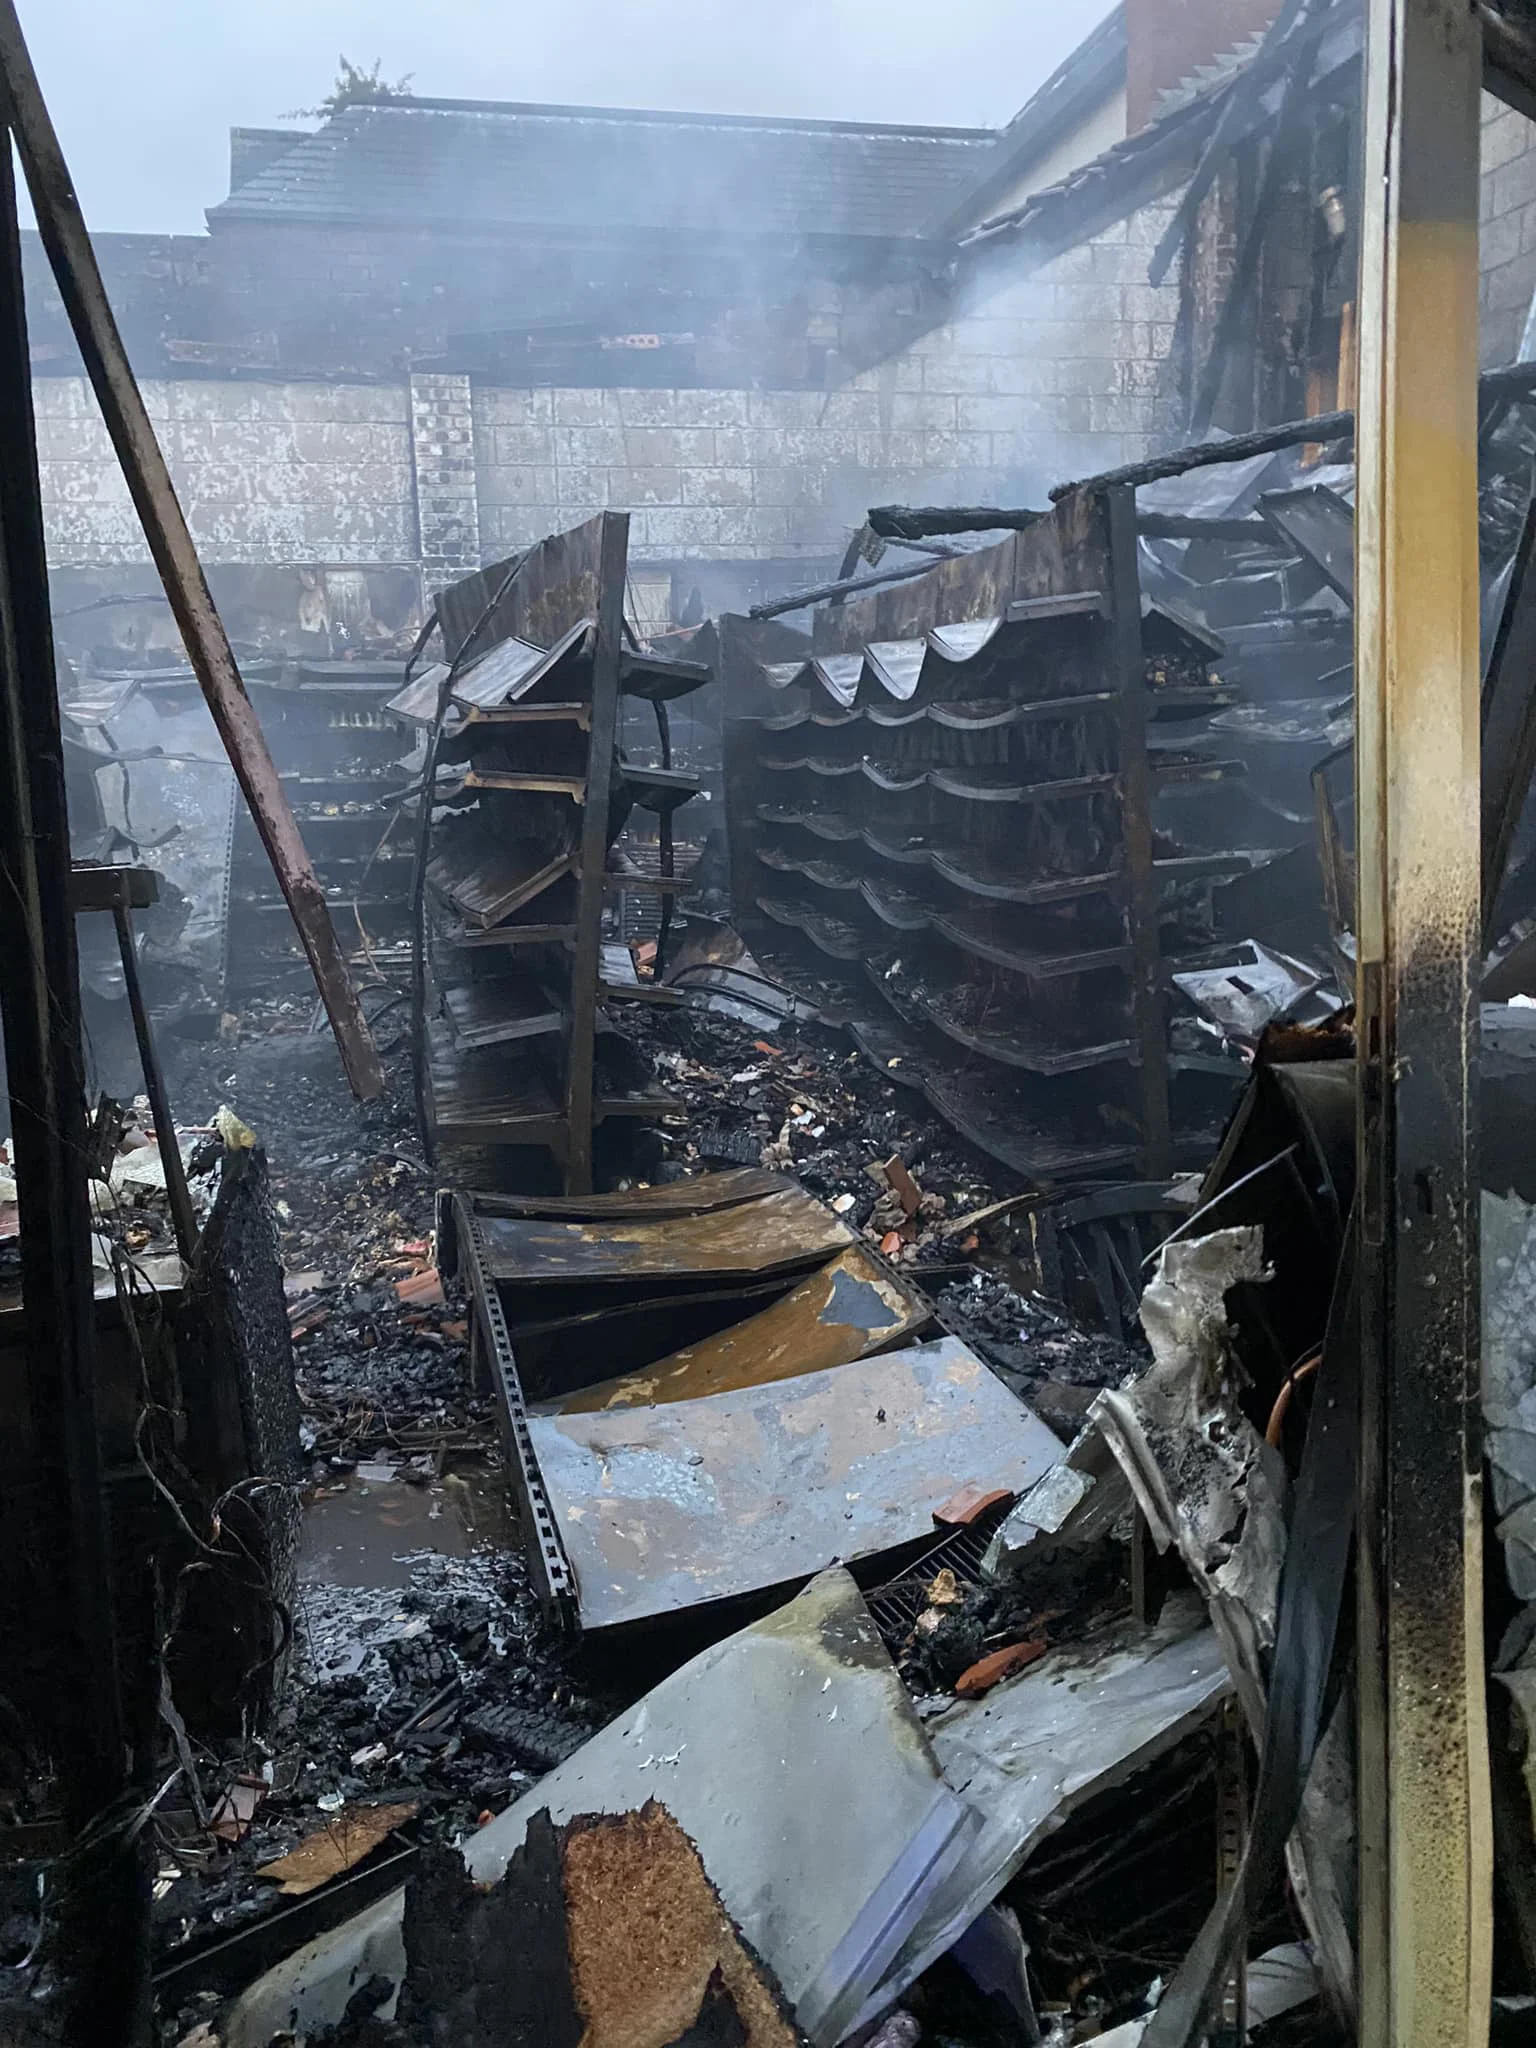 fire damaged building showing burnt shelving